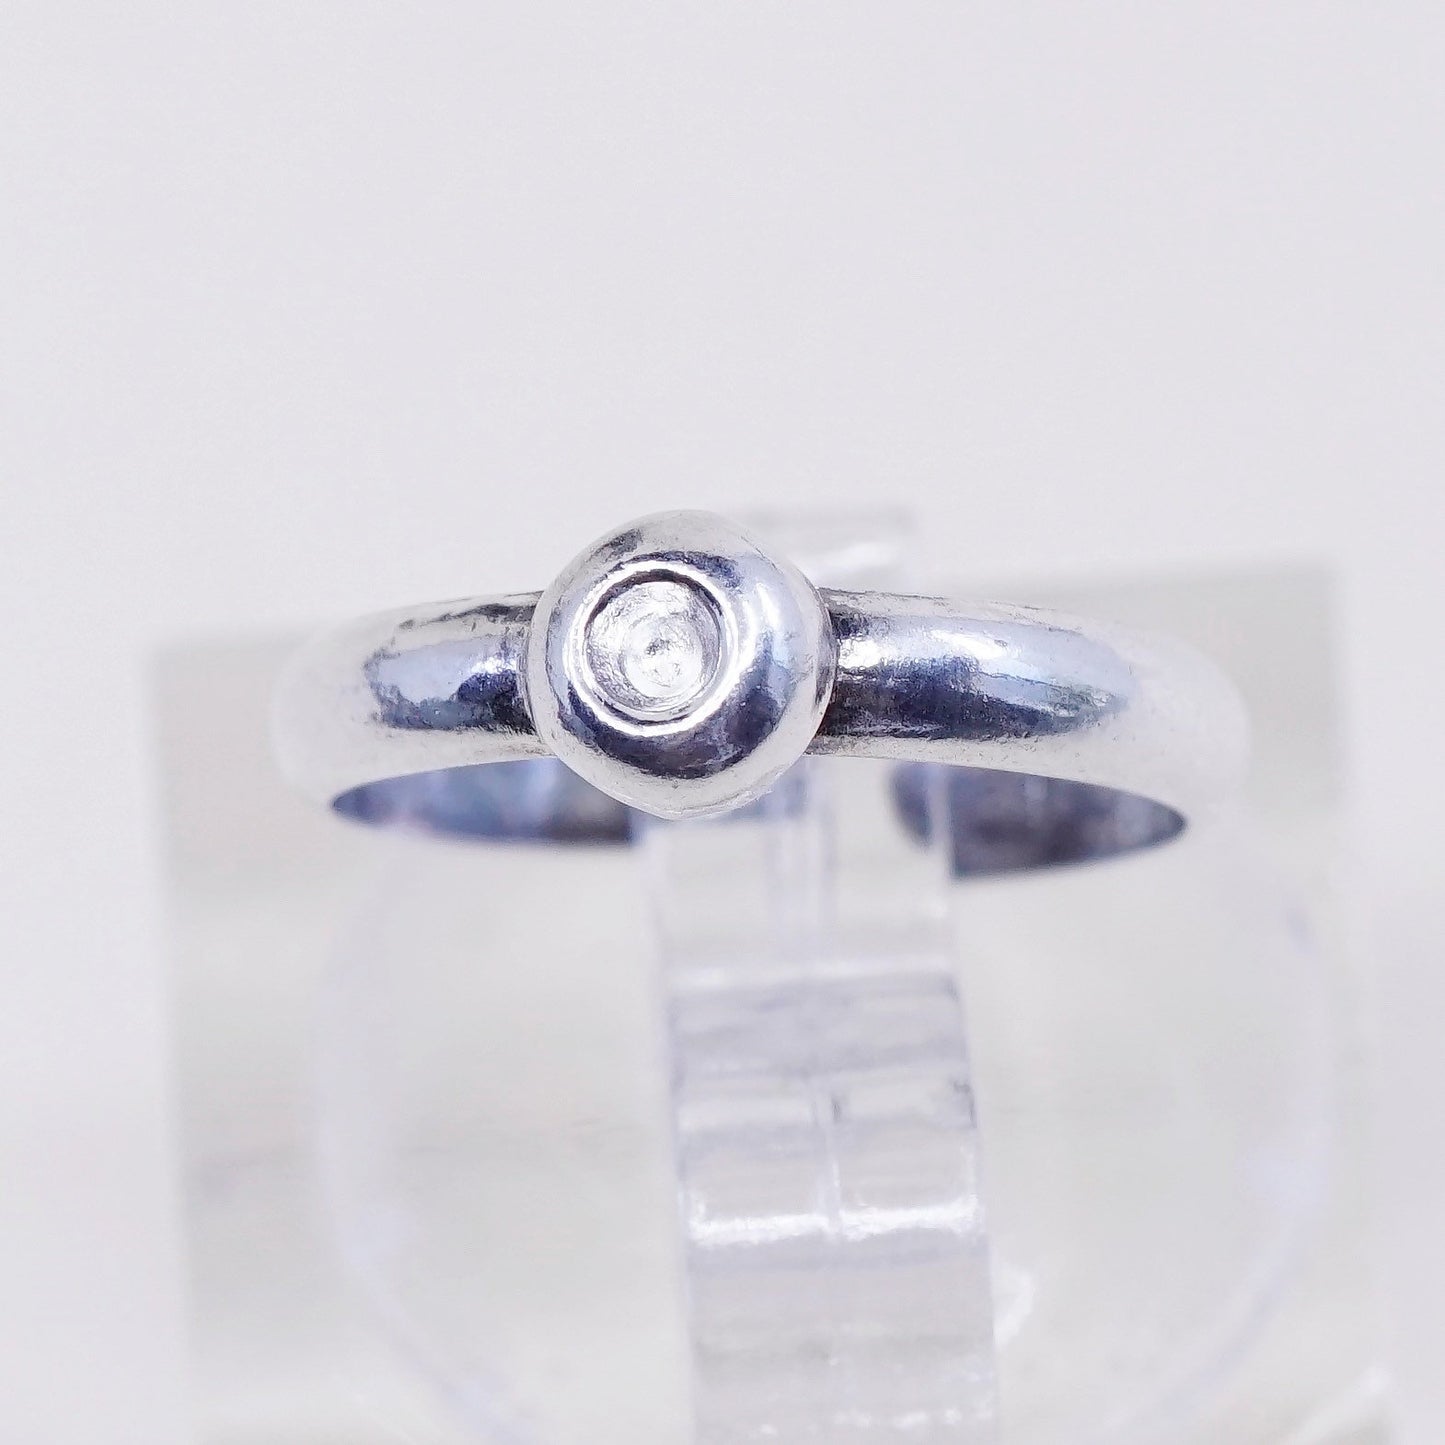 Size 1.5, vintage Sterling silver handmade ring